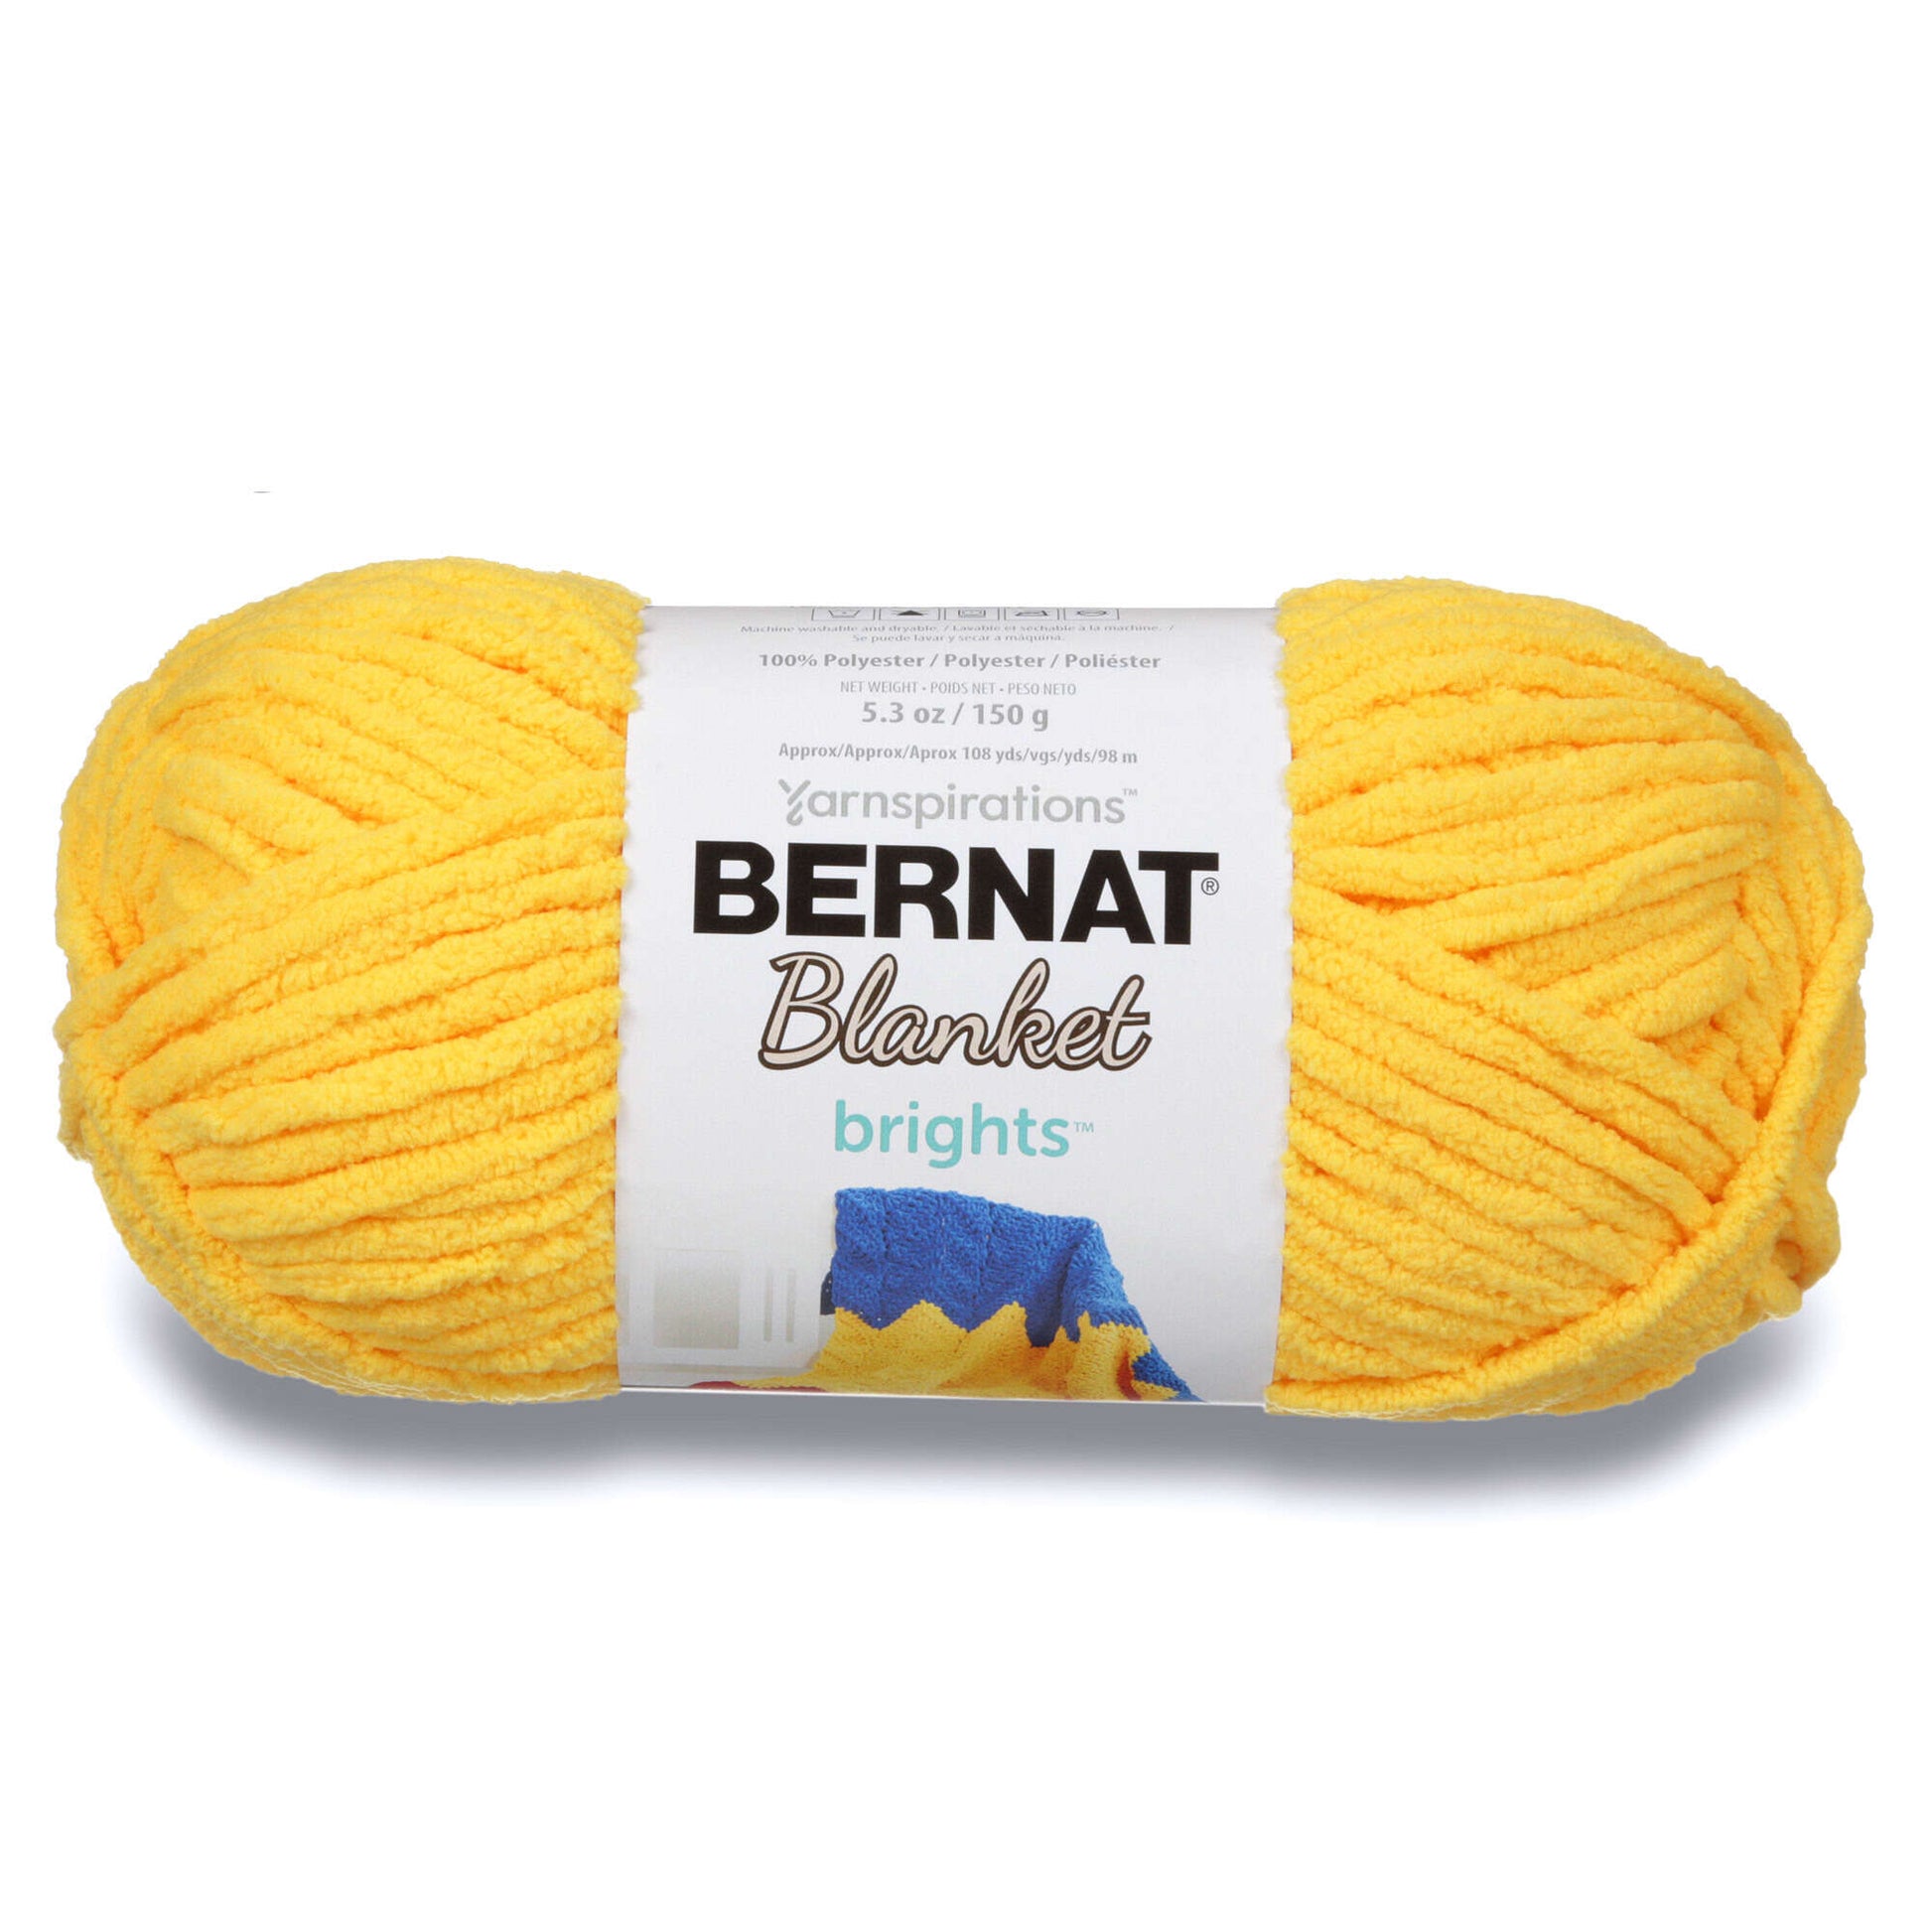 Bernat Blanket Brights Yarn - Clearance Shades* School Bus Yellow